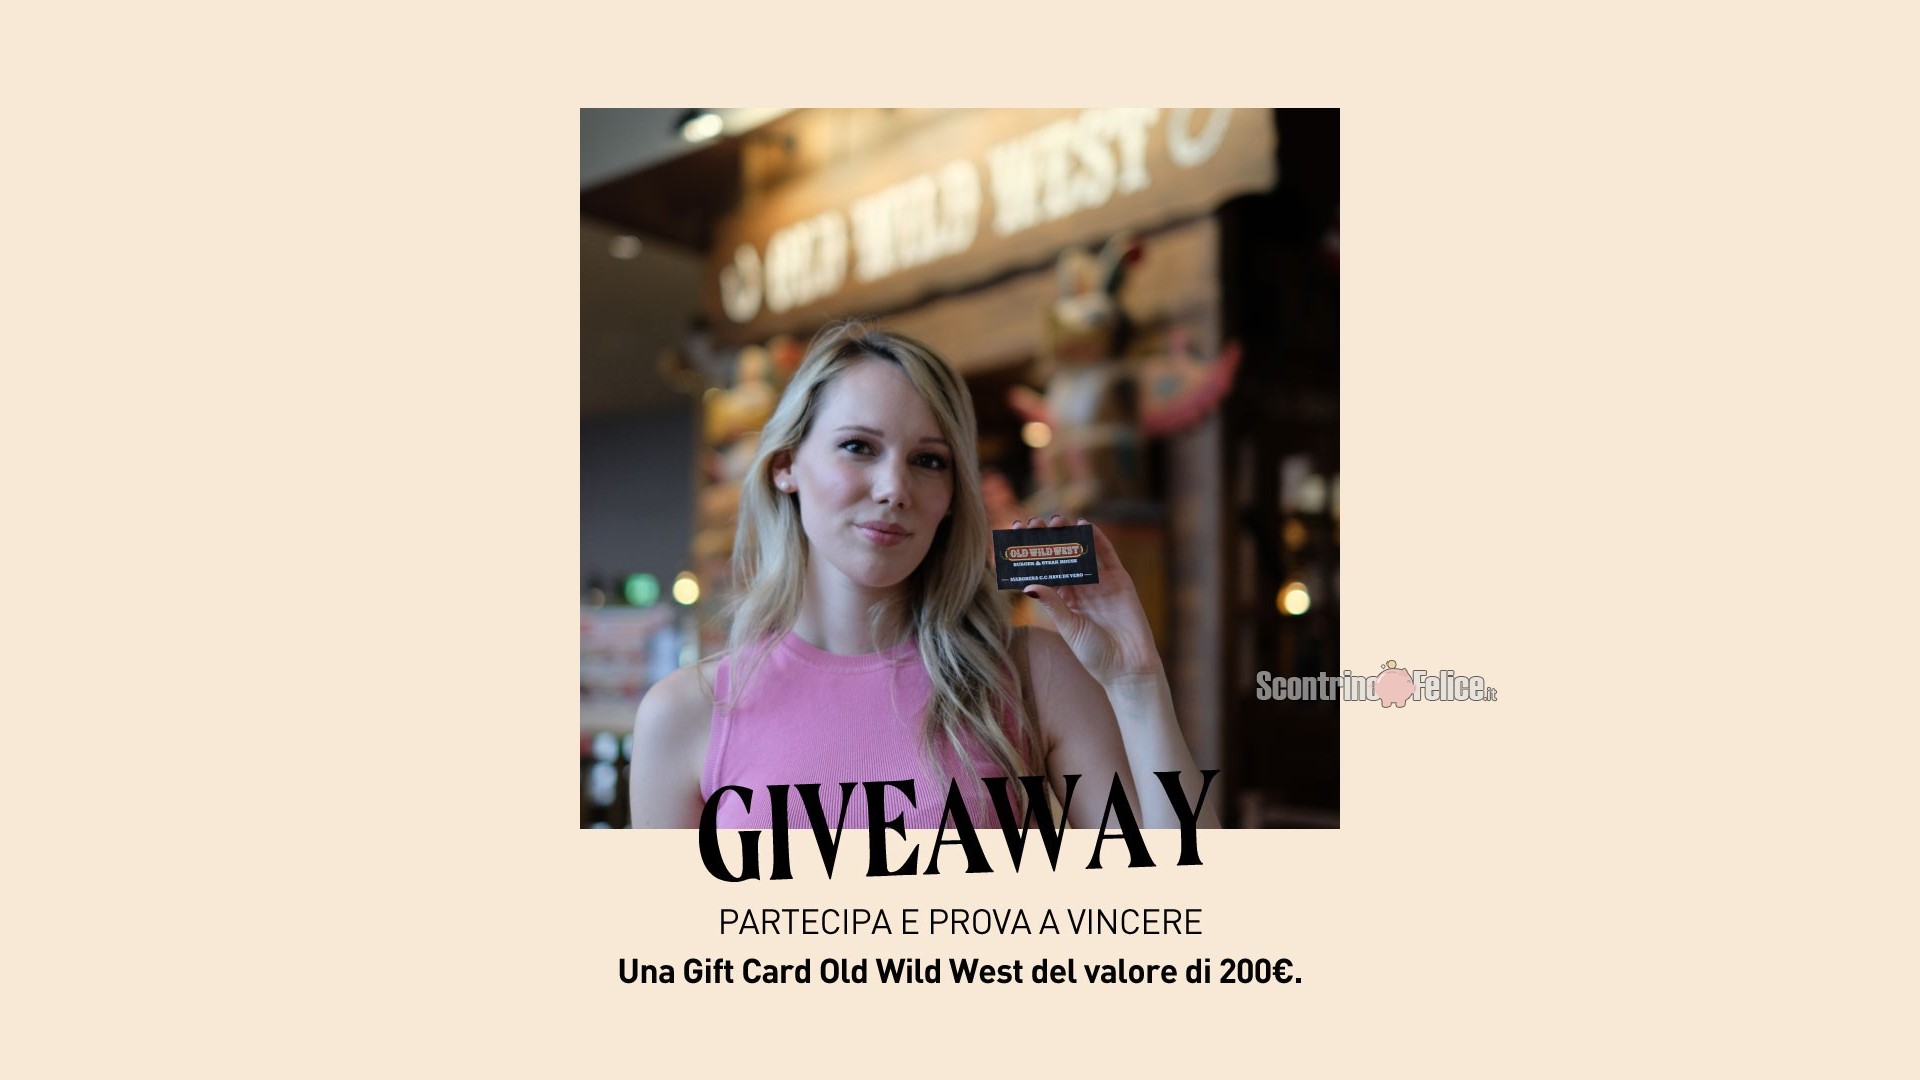 Giveaway Nave De Vero: vinci 1 gift Card Old Wild West da 200 euro